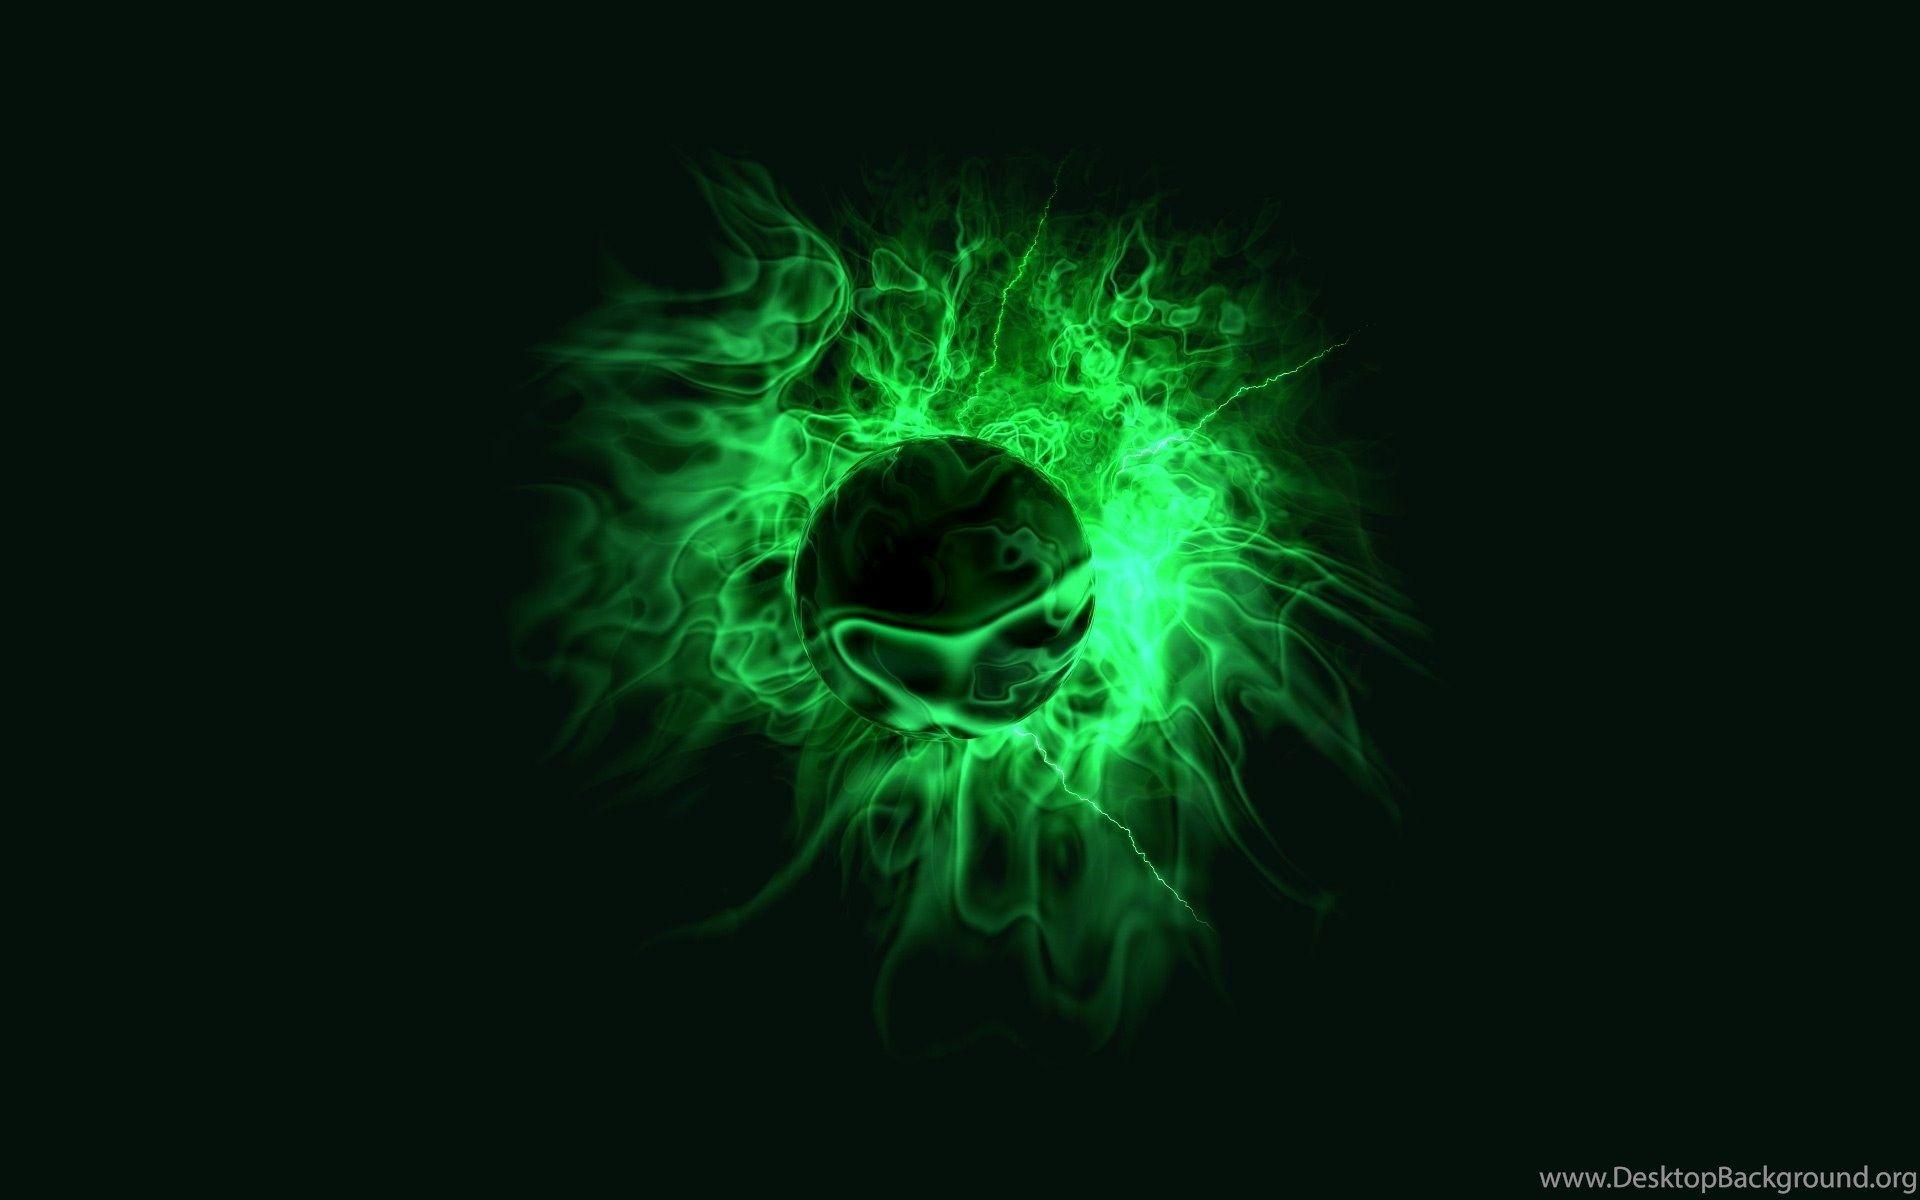 Pure Lime Green Ball Lightning 3D Wallpaper < Abstract < Gallery. Desktop Background